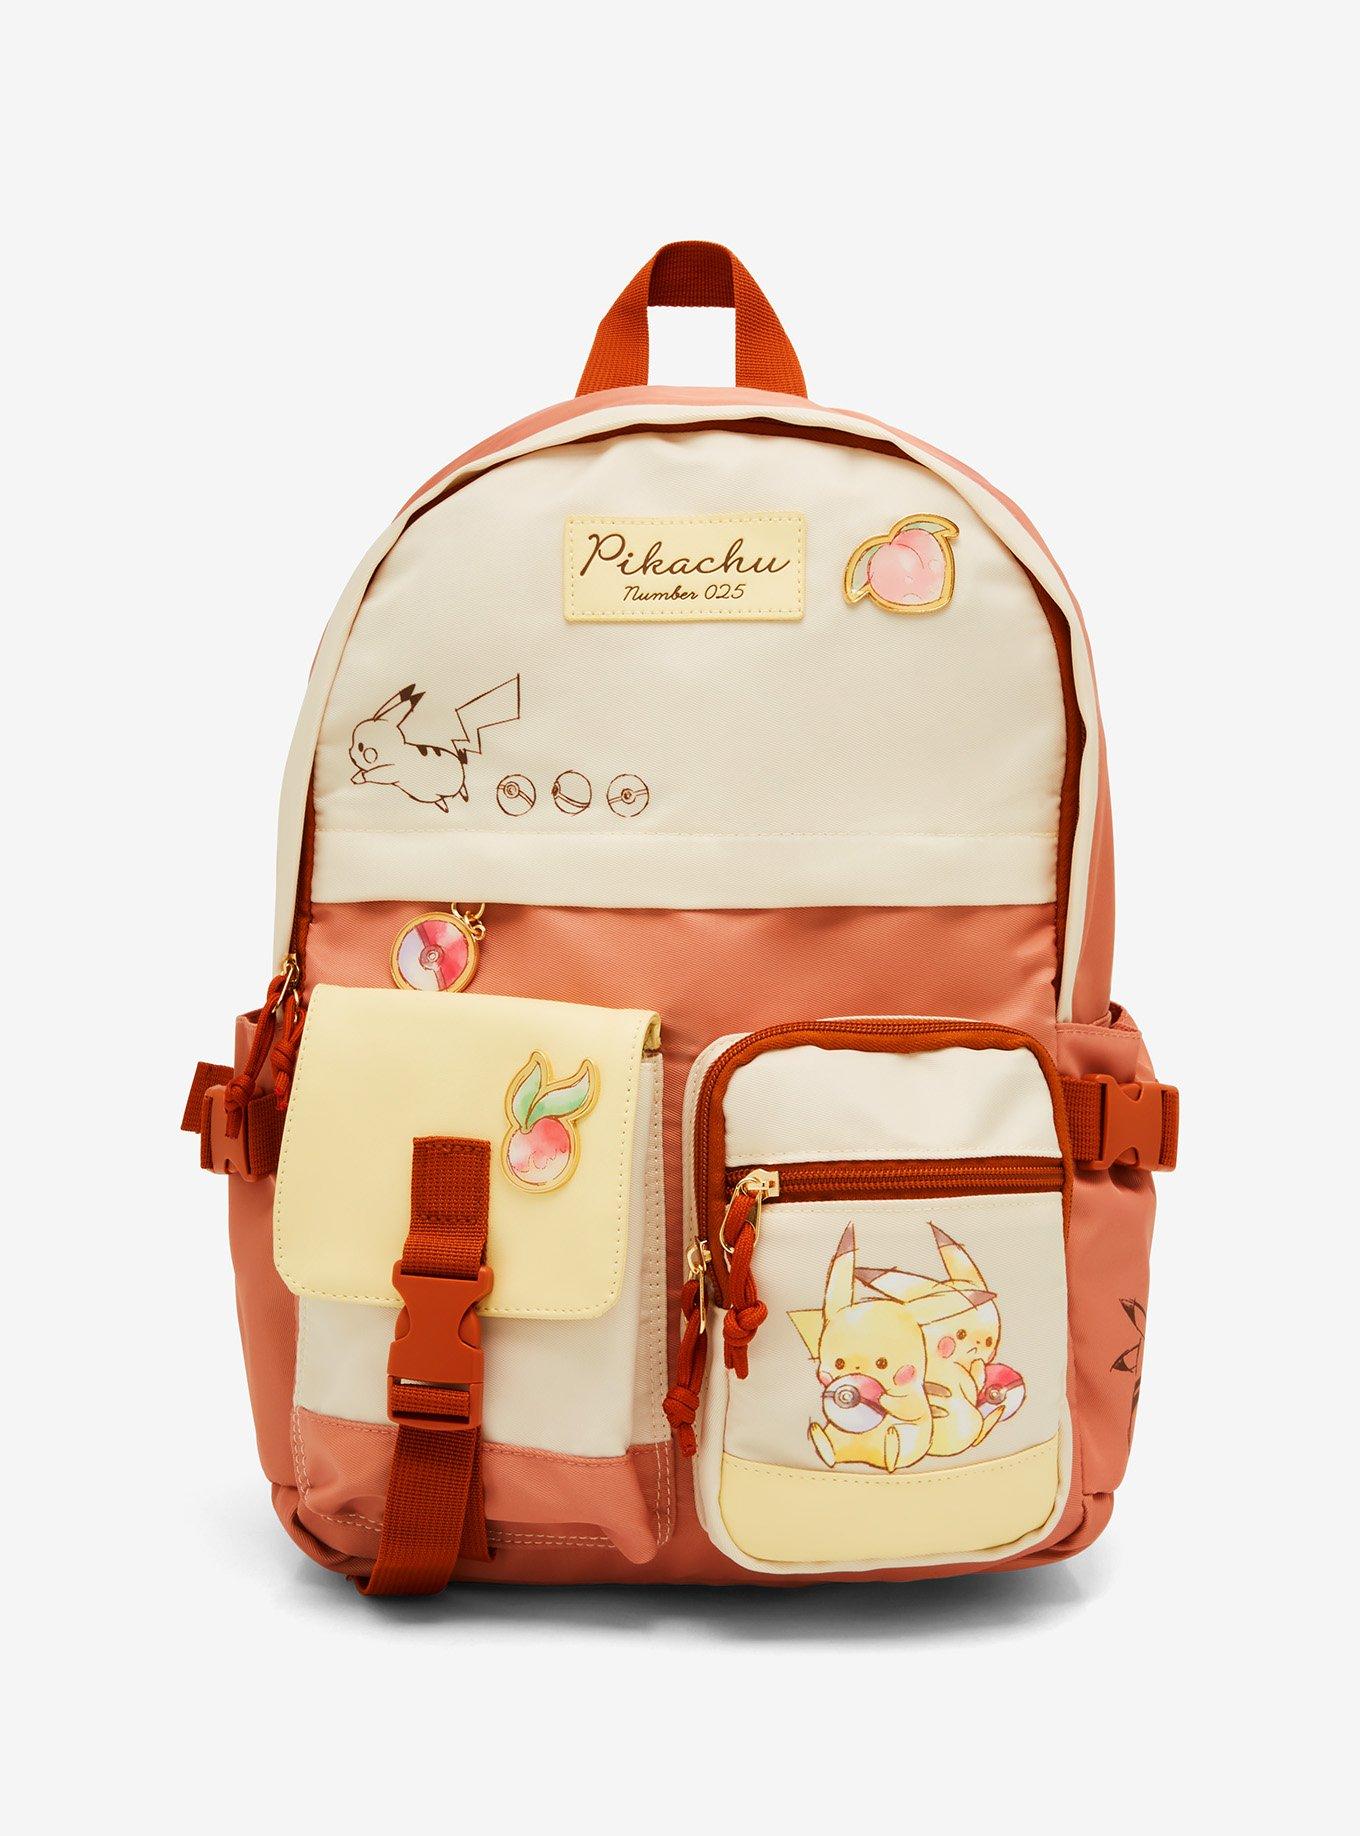 NEW Pokemon Pikachu Backpack Lunch box School Bag Kid Bookbag Red